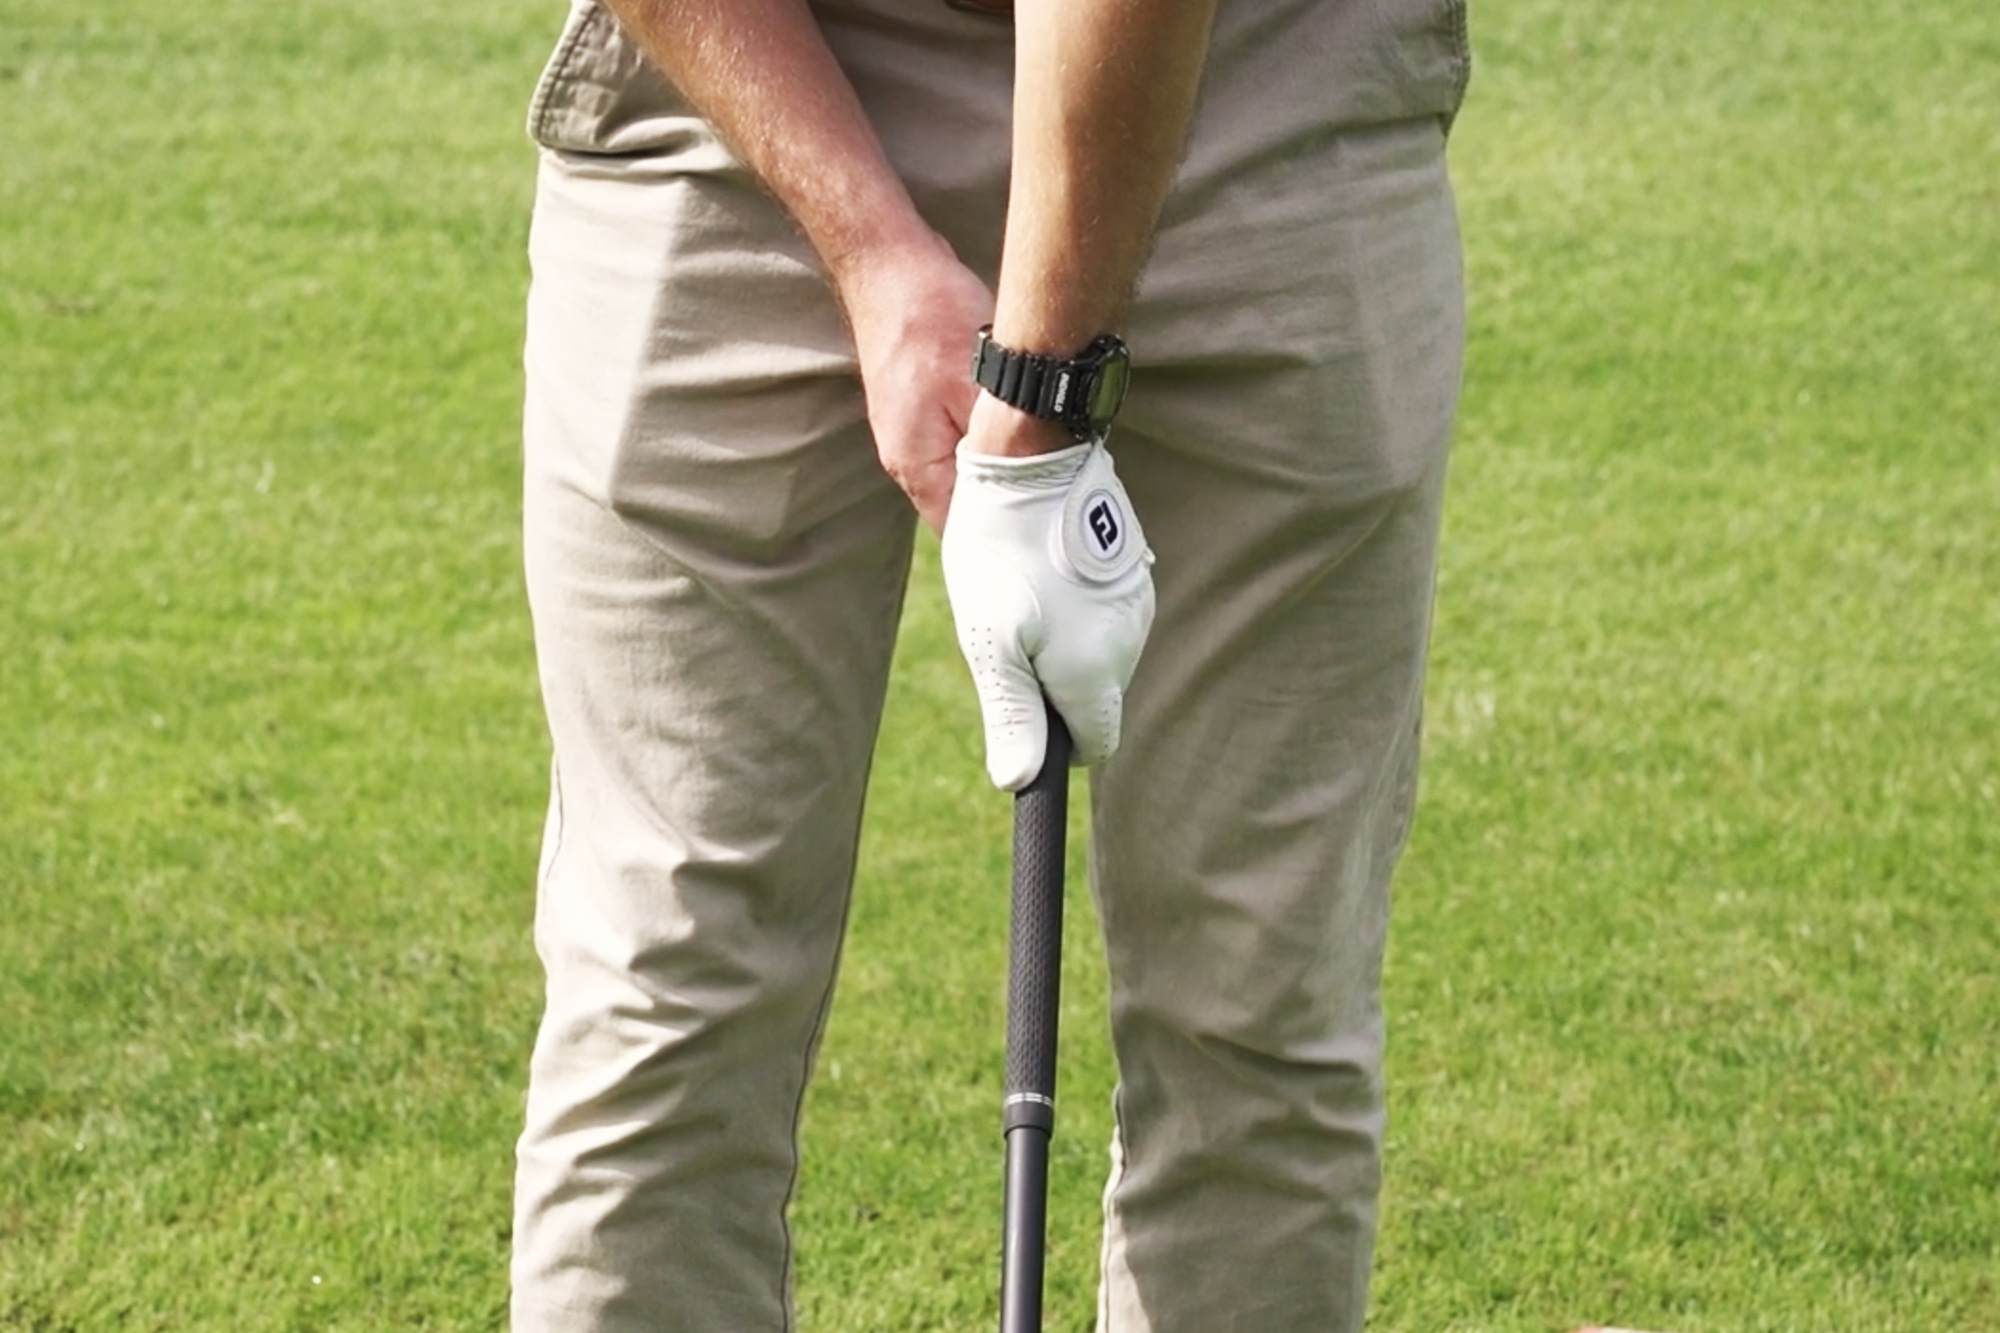 How to grip a golf club properly - Golf Tips - National Club Golfer